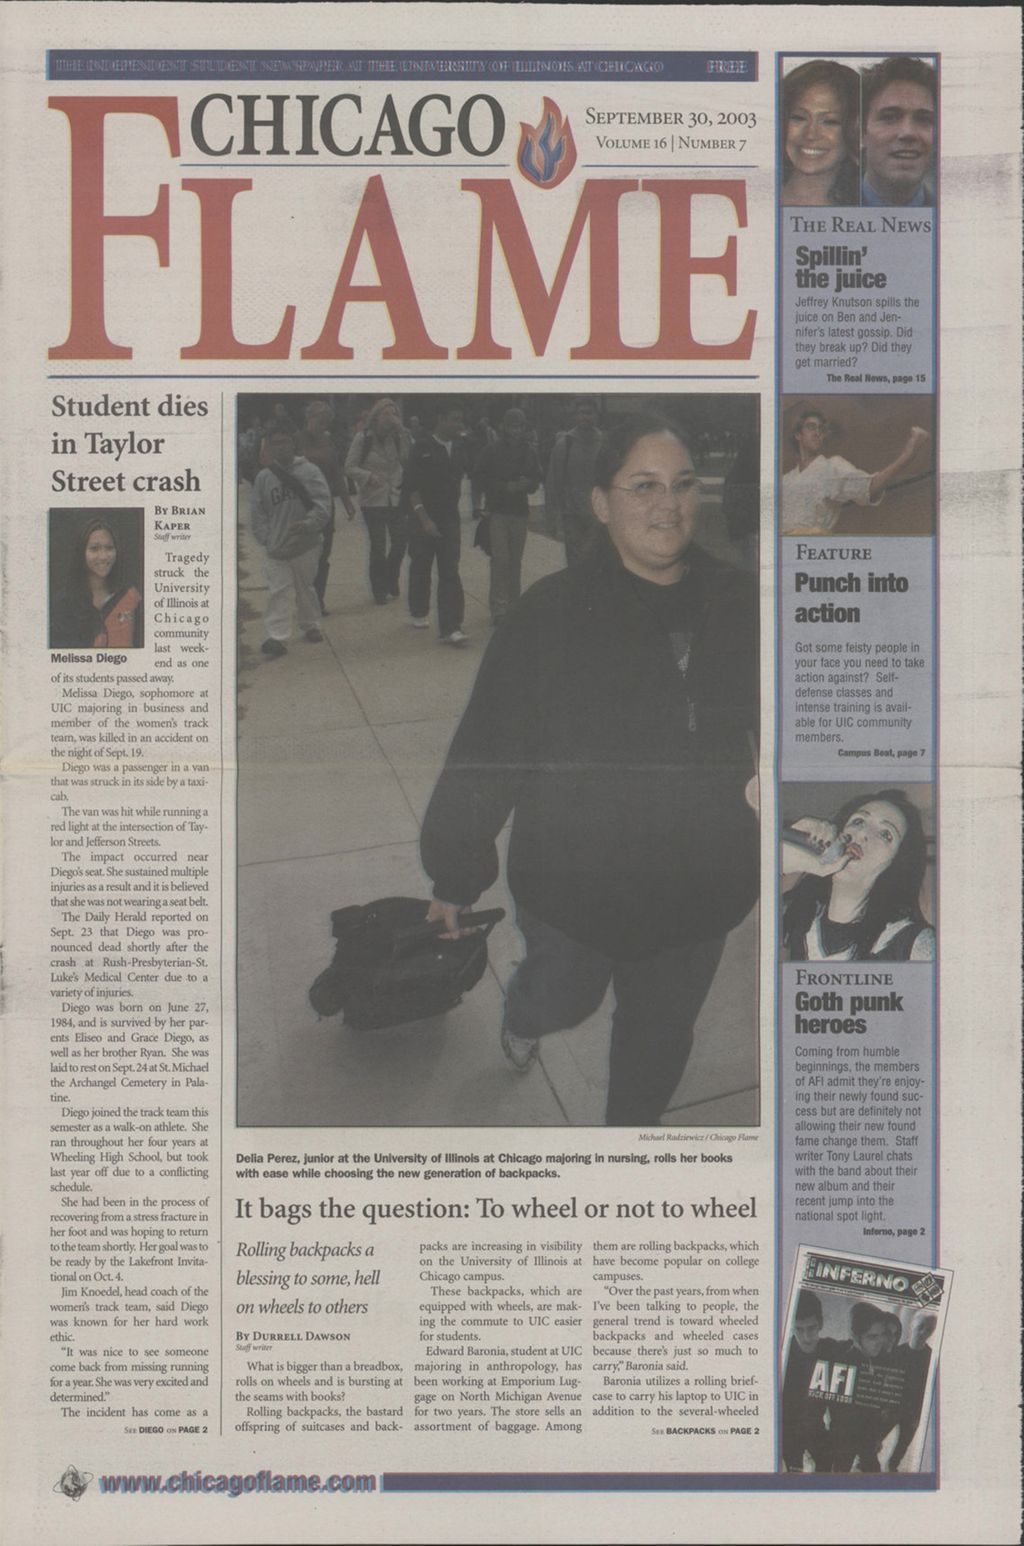 Chicago Flame (September 30, 2003)